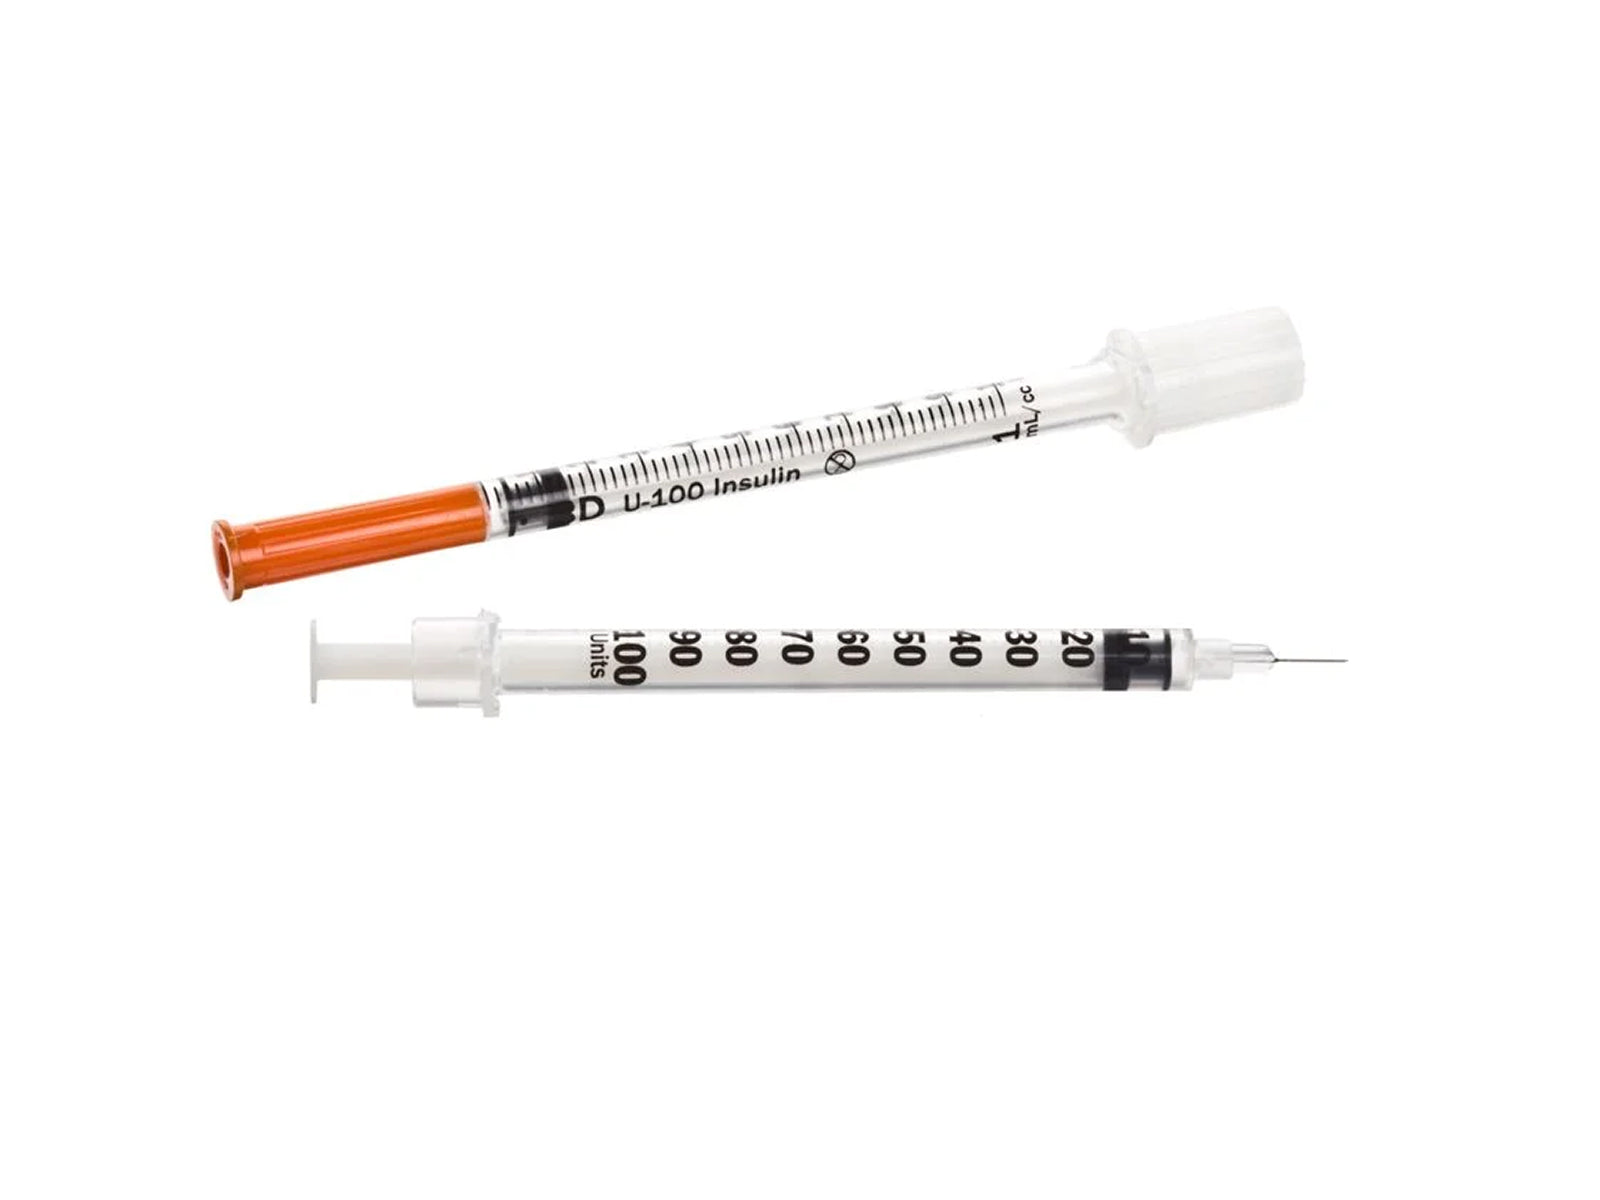 Microfine Plus Demi 1ml U 100 Syringe 29g X 12 7mm 0 Muzamedical